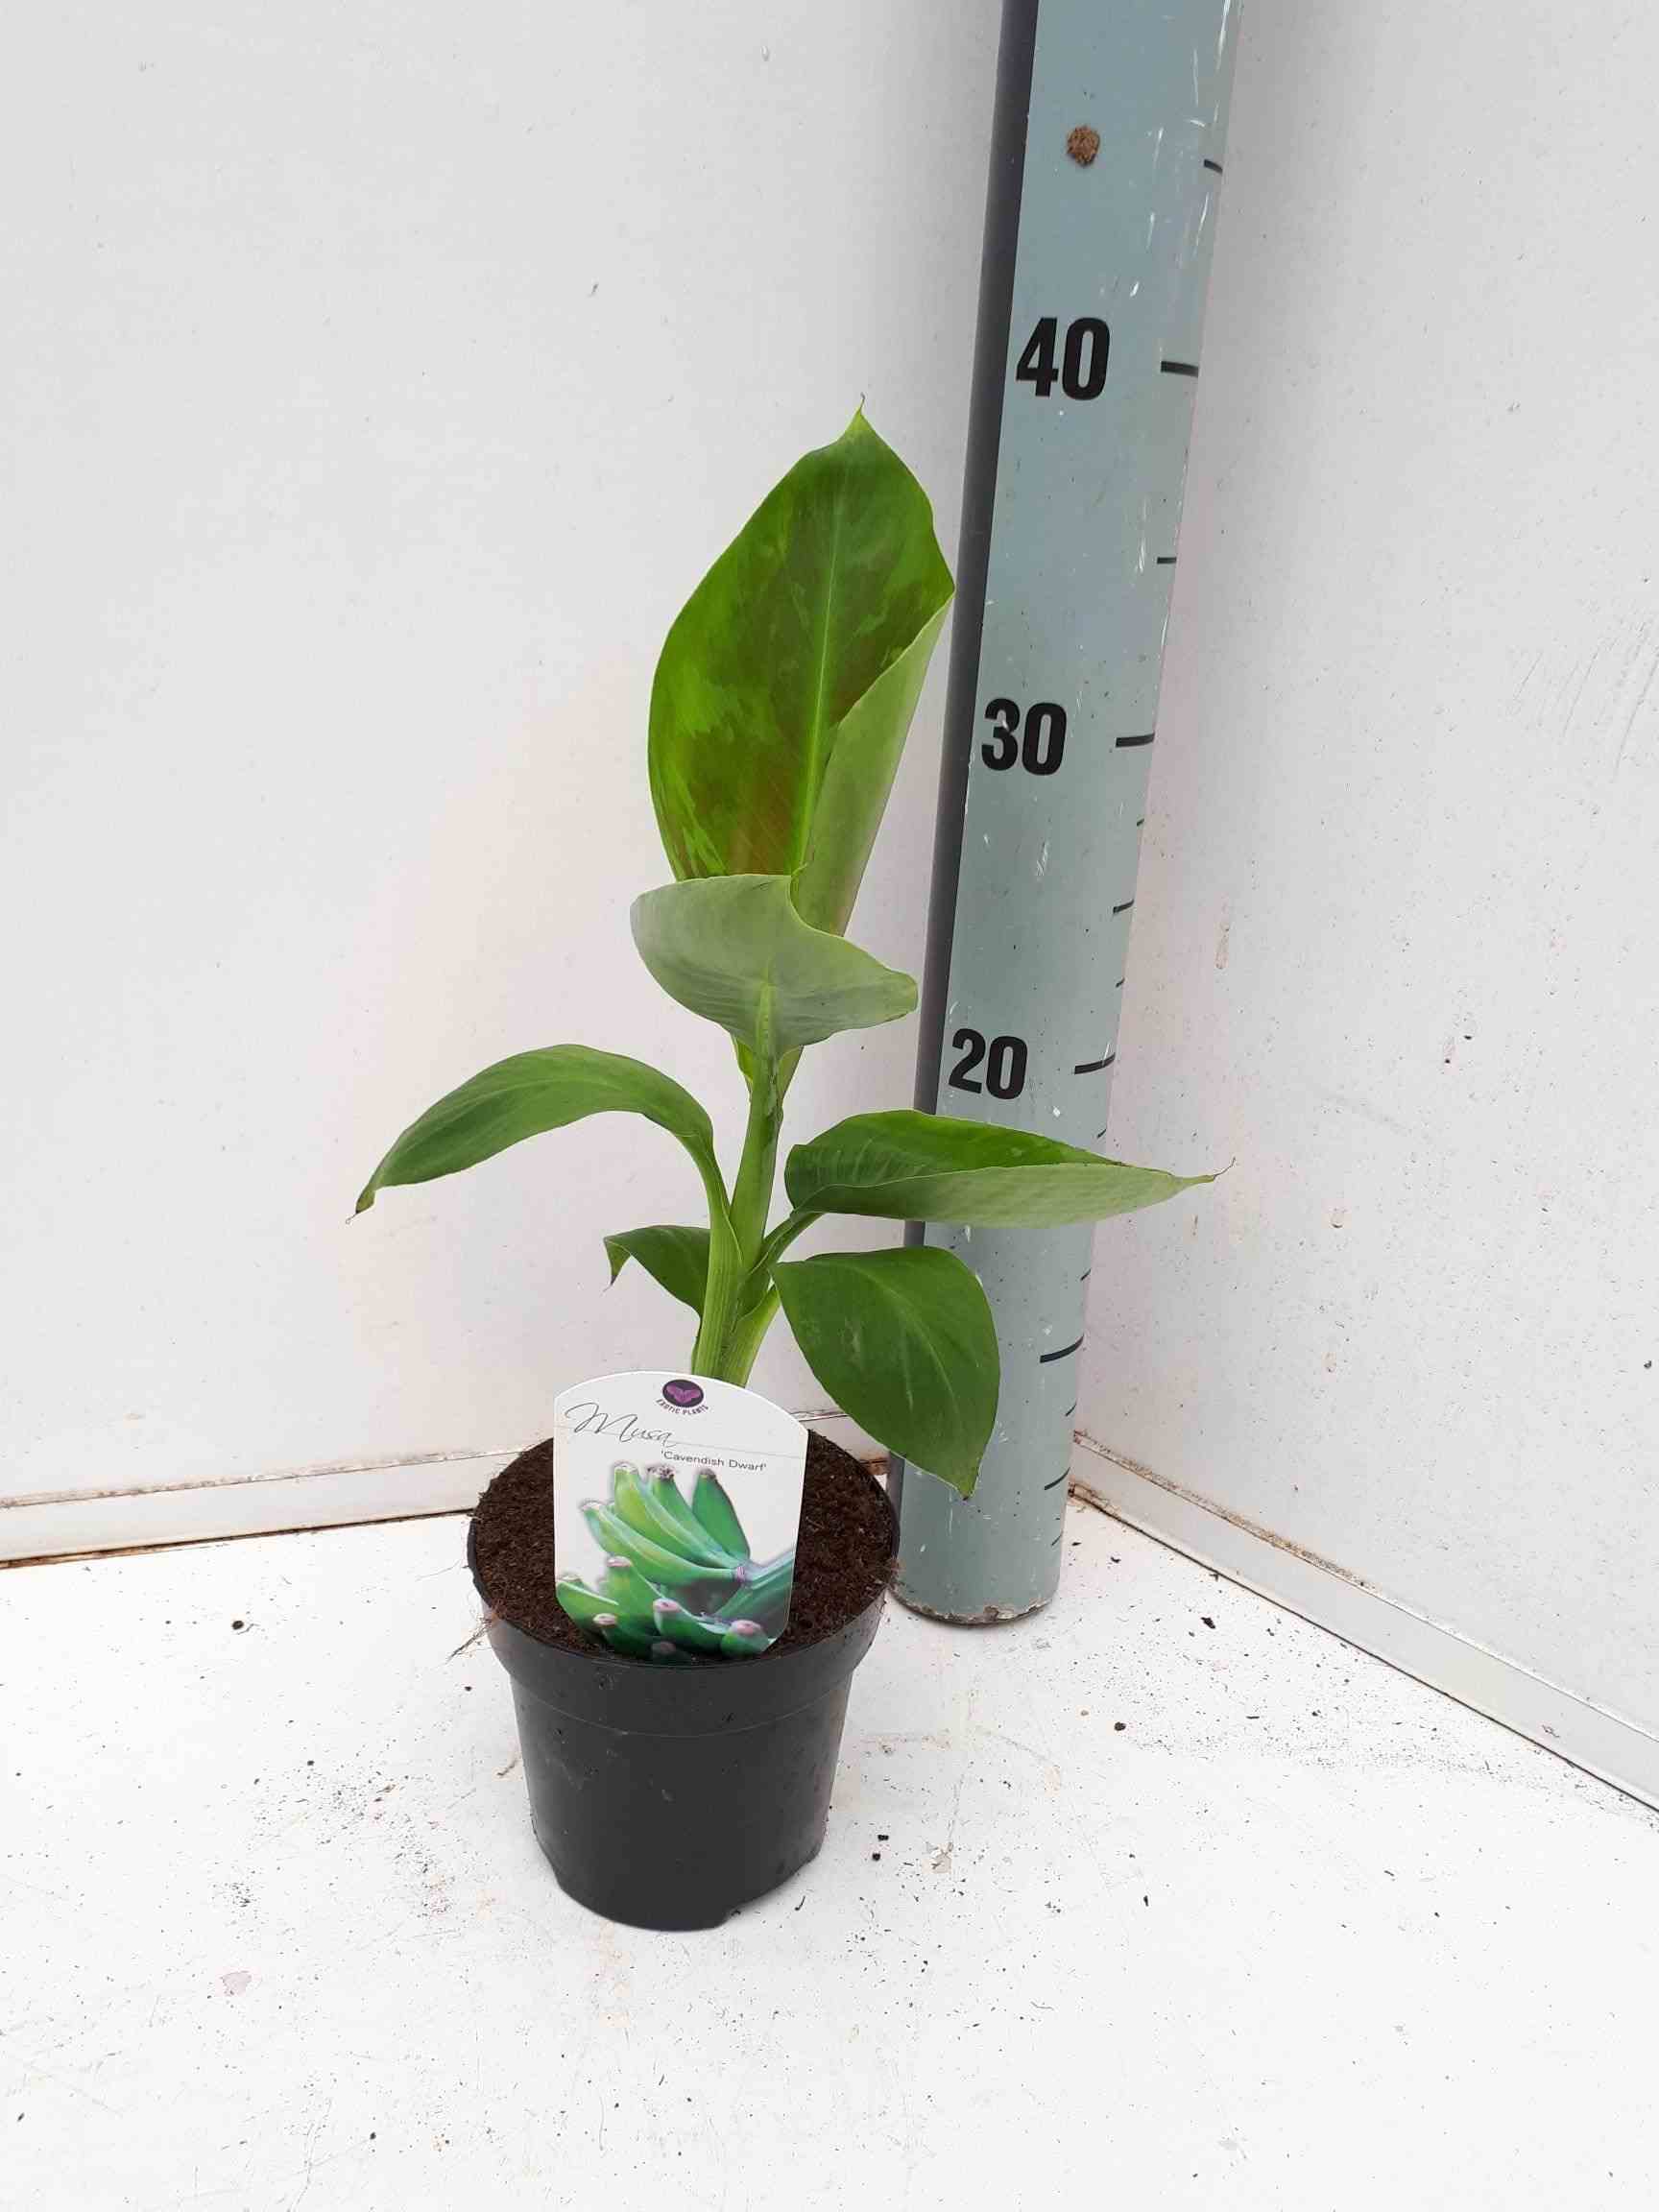 Bananier musa acuminata cv. Super dwarf cavendish   rose - taille pot de 2 litres - 20/40 cm